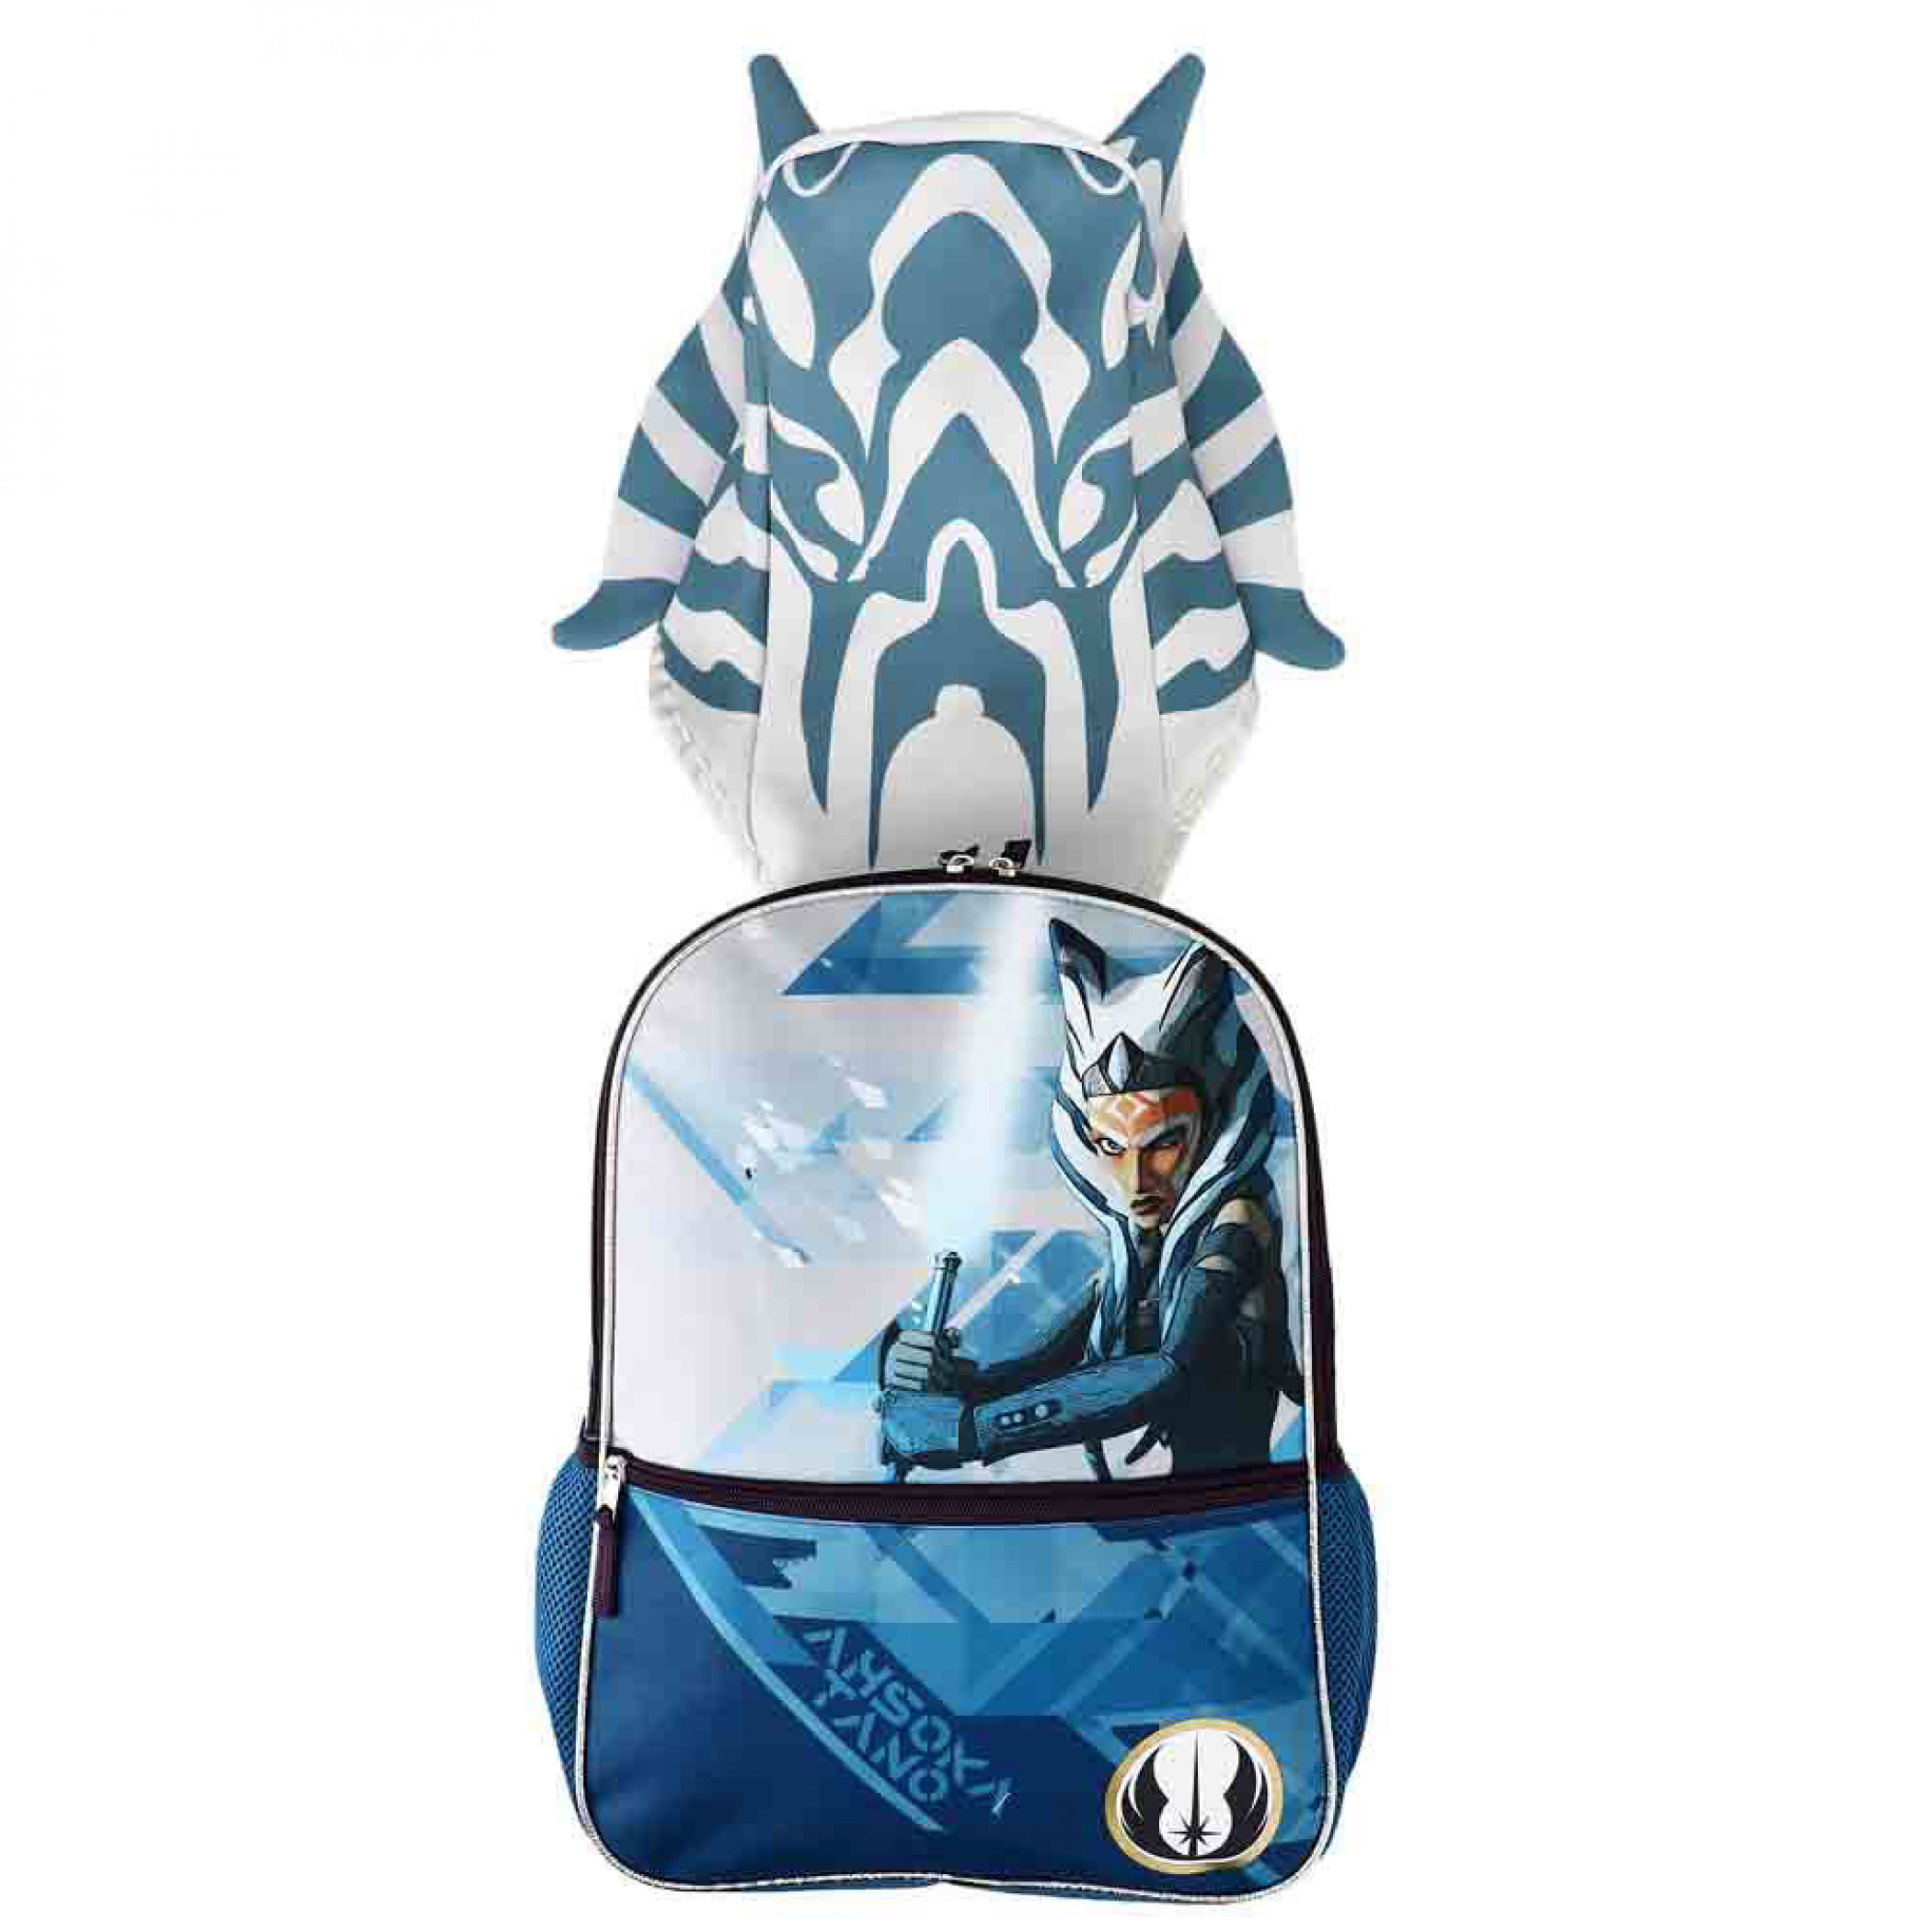 Loungefly Star Wars The Clone Wars Ahsoka Tano Backpack Bag SHIPS FAST In Hand 